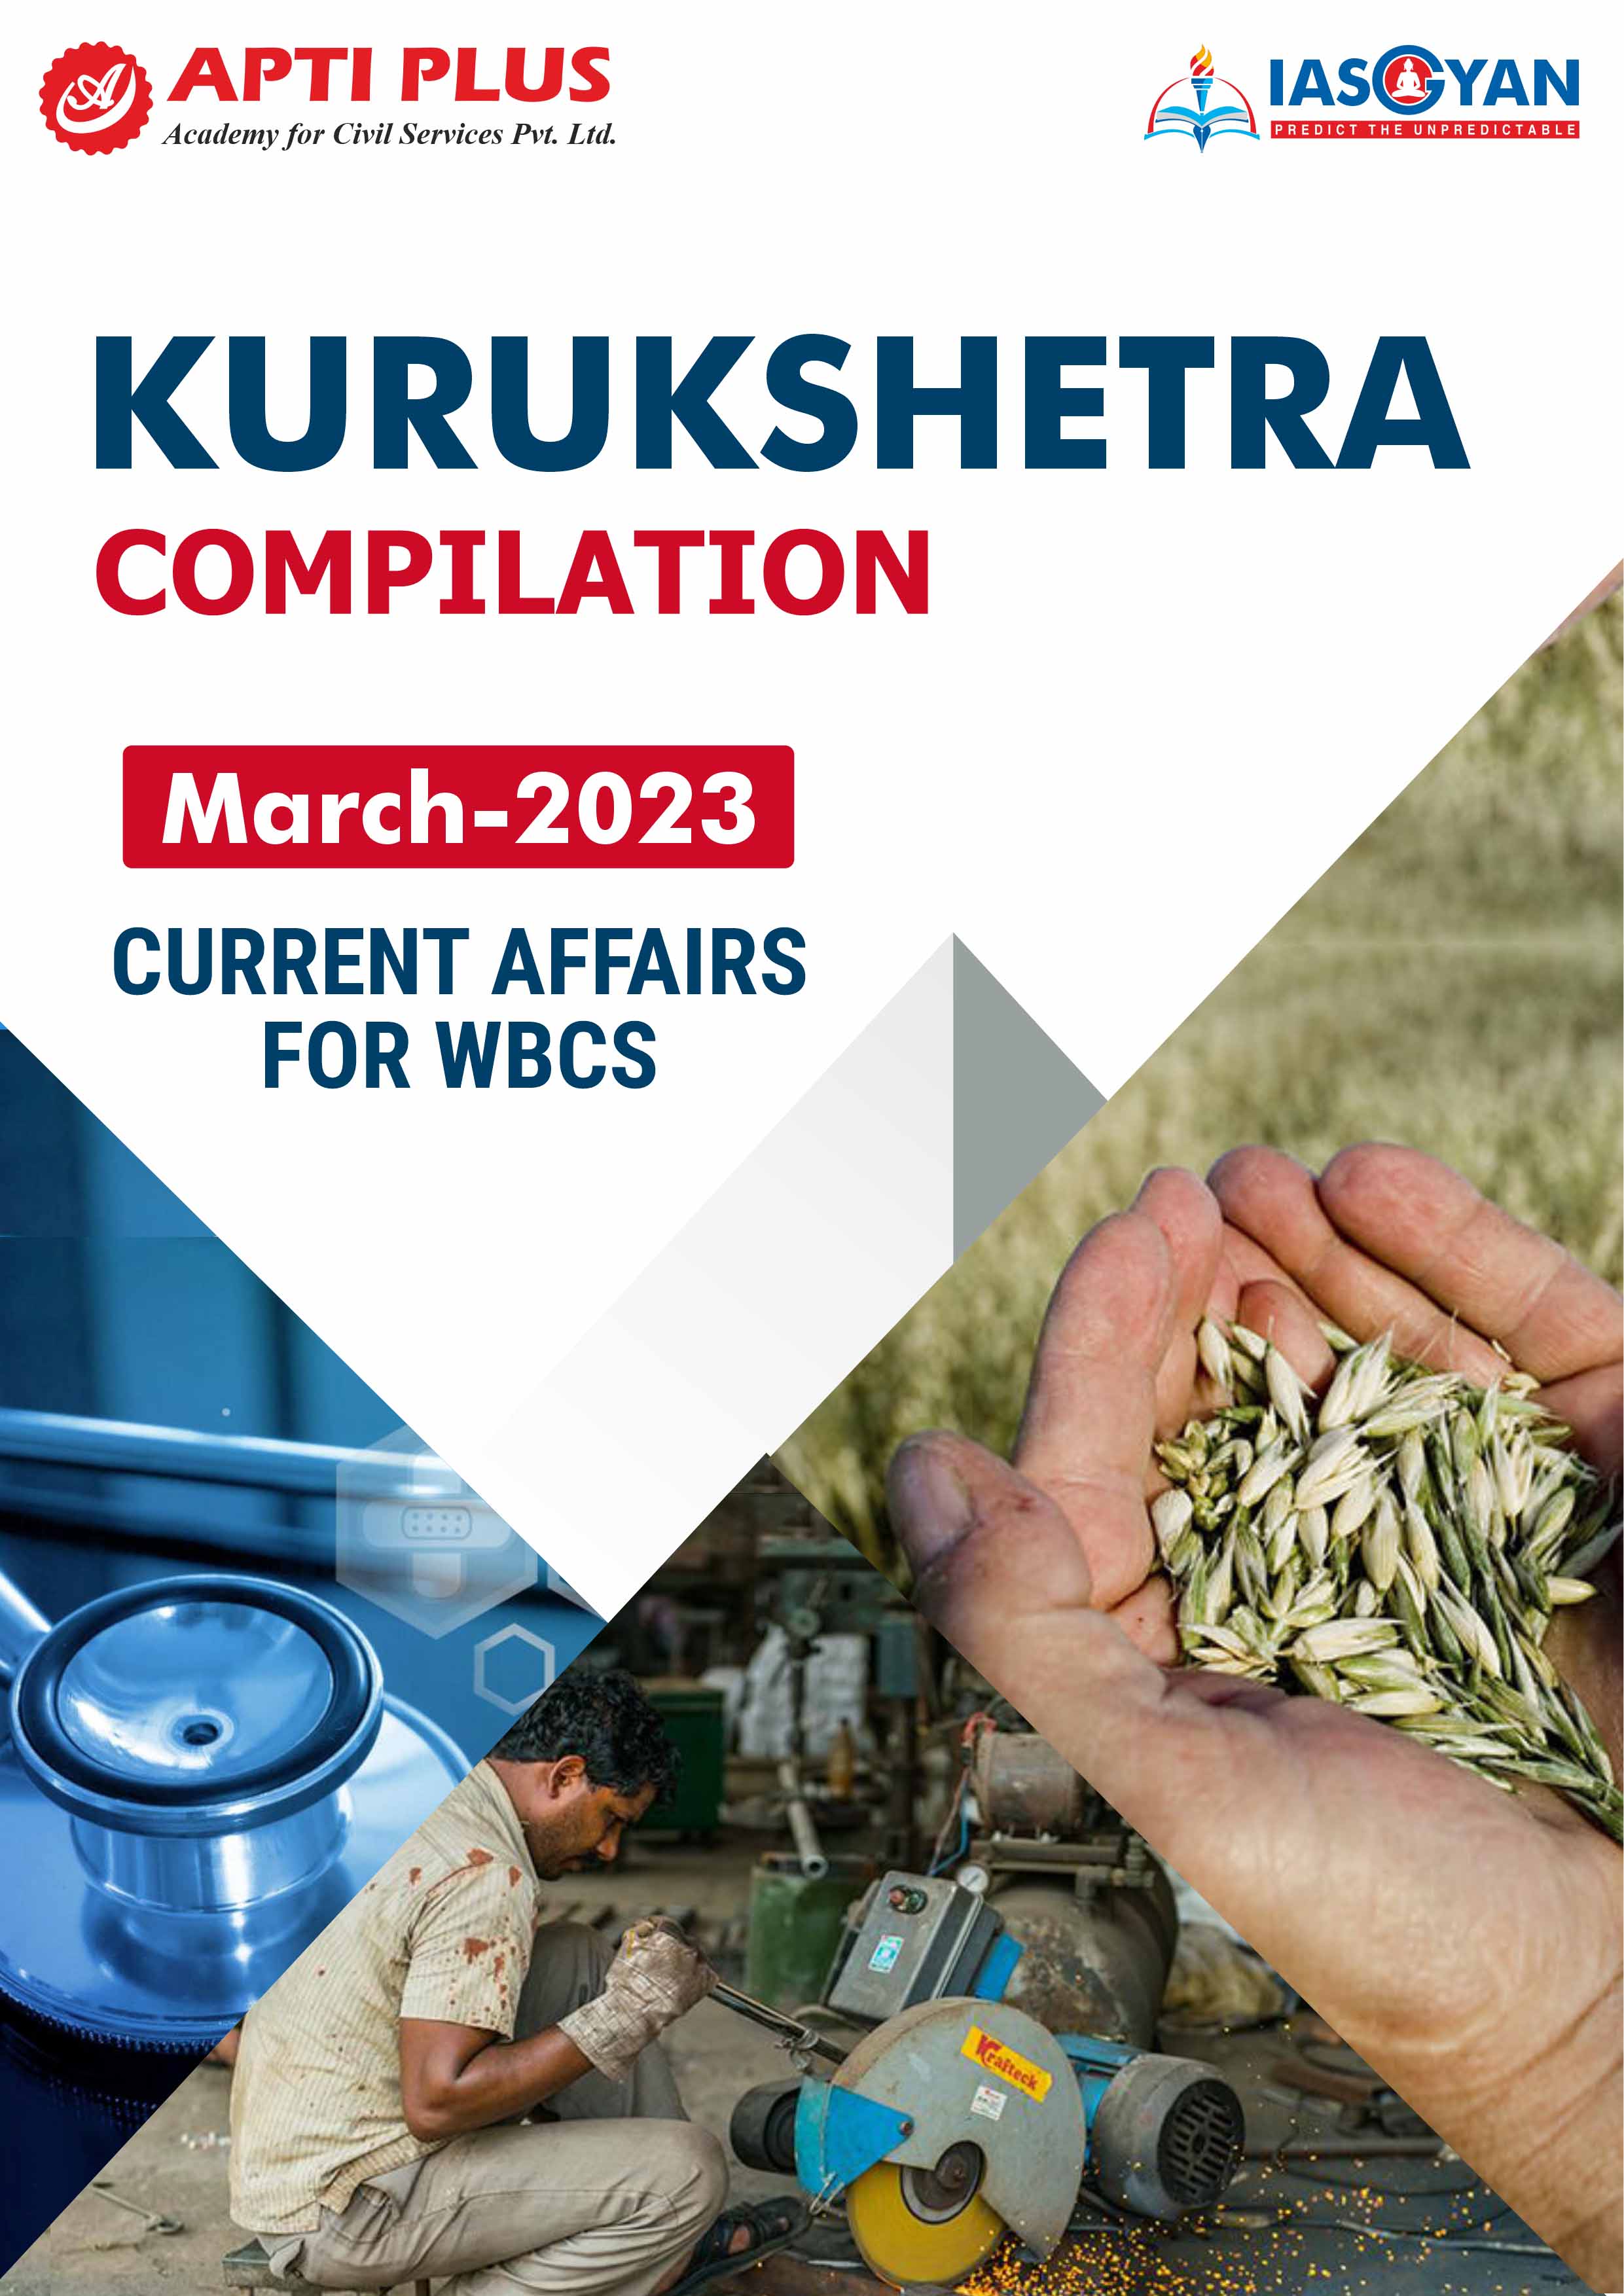 KURUKSHETRA COMPILATION MARCH 2023